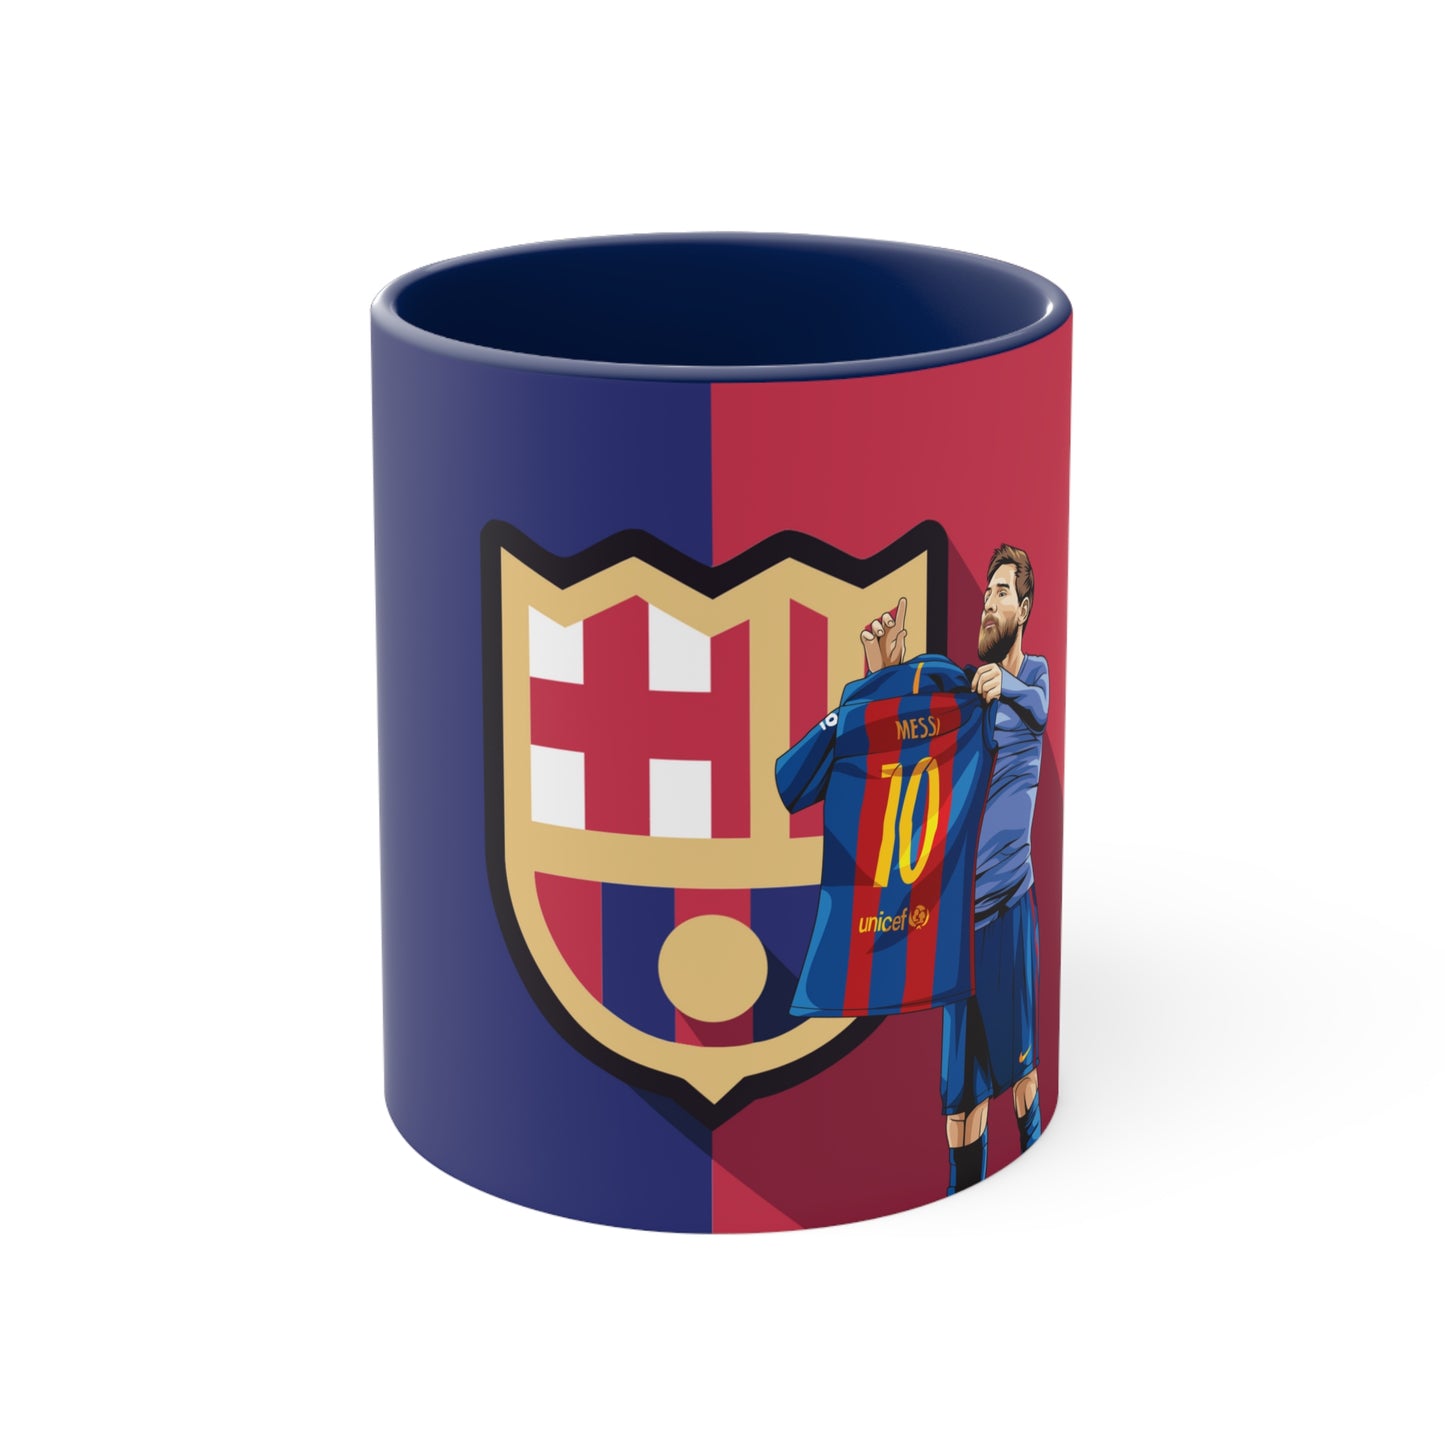 El Clasico Iconic Messi Celebration Accent Coffee Mug, 11oz